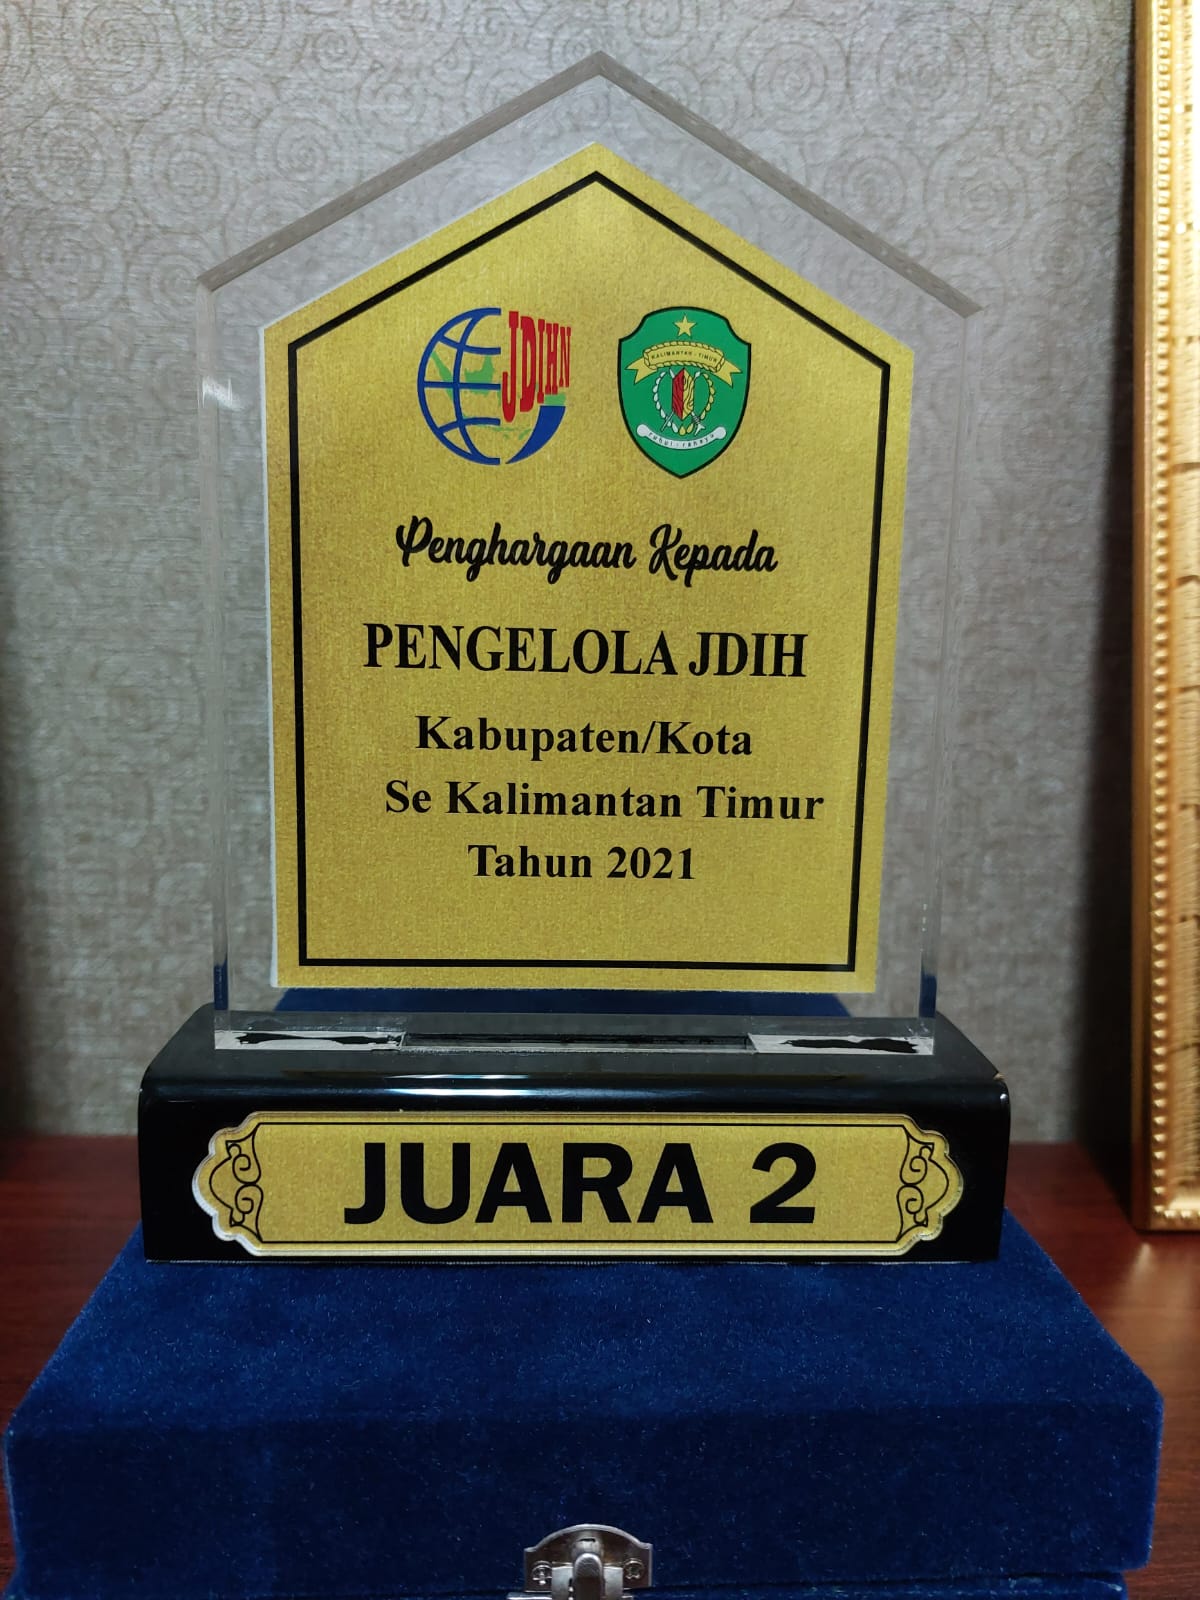 Juara 2 Pengelola JDIH Kabupaten/Kota Se Kalimantan Timur Tahun 2021